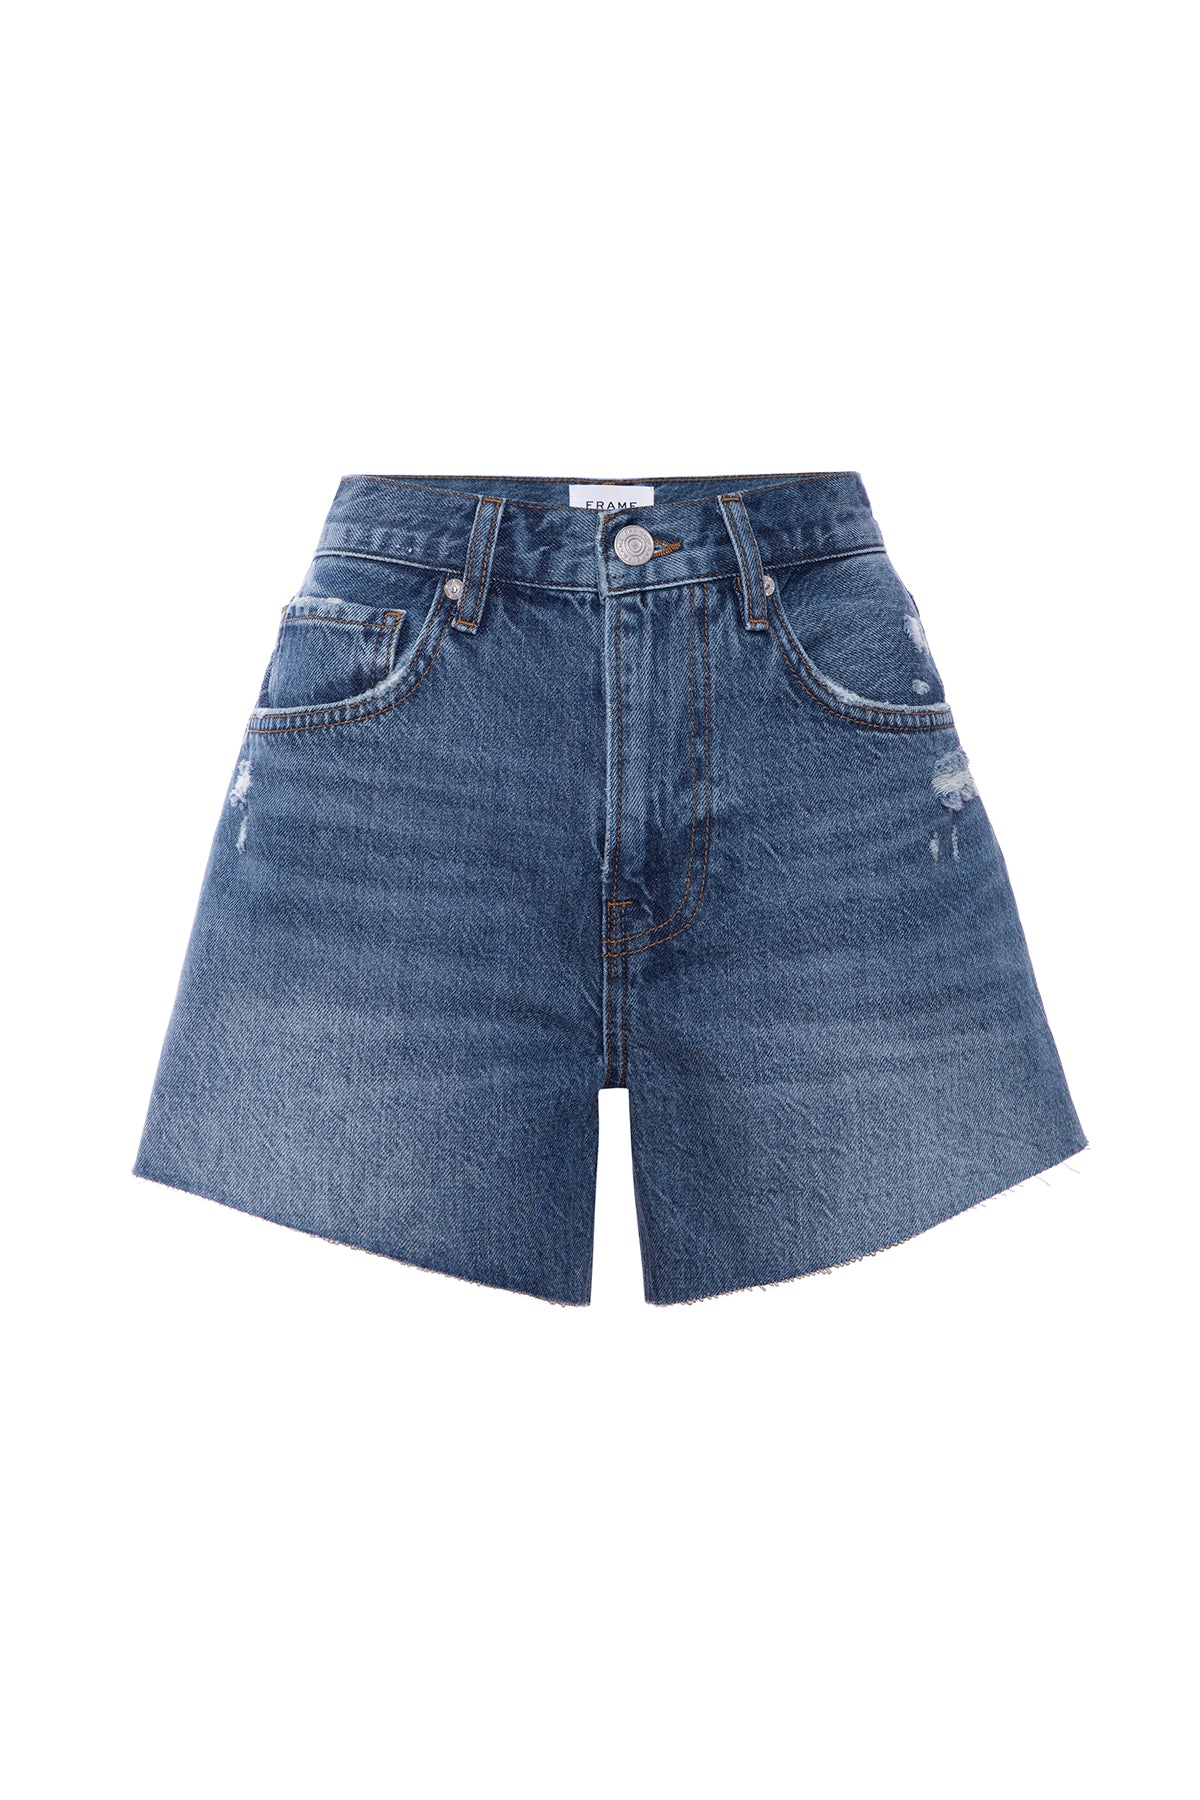 Denim Shorts – French Cuff Boutique